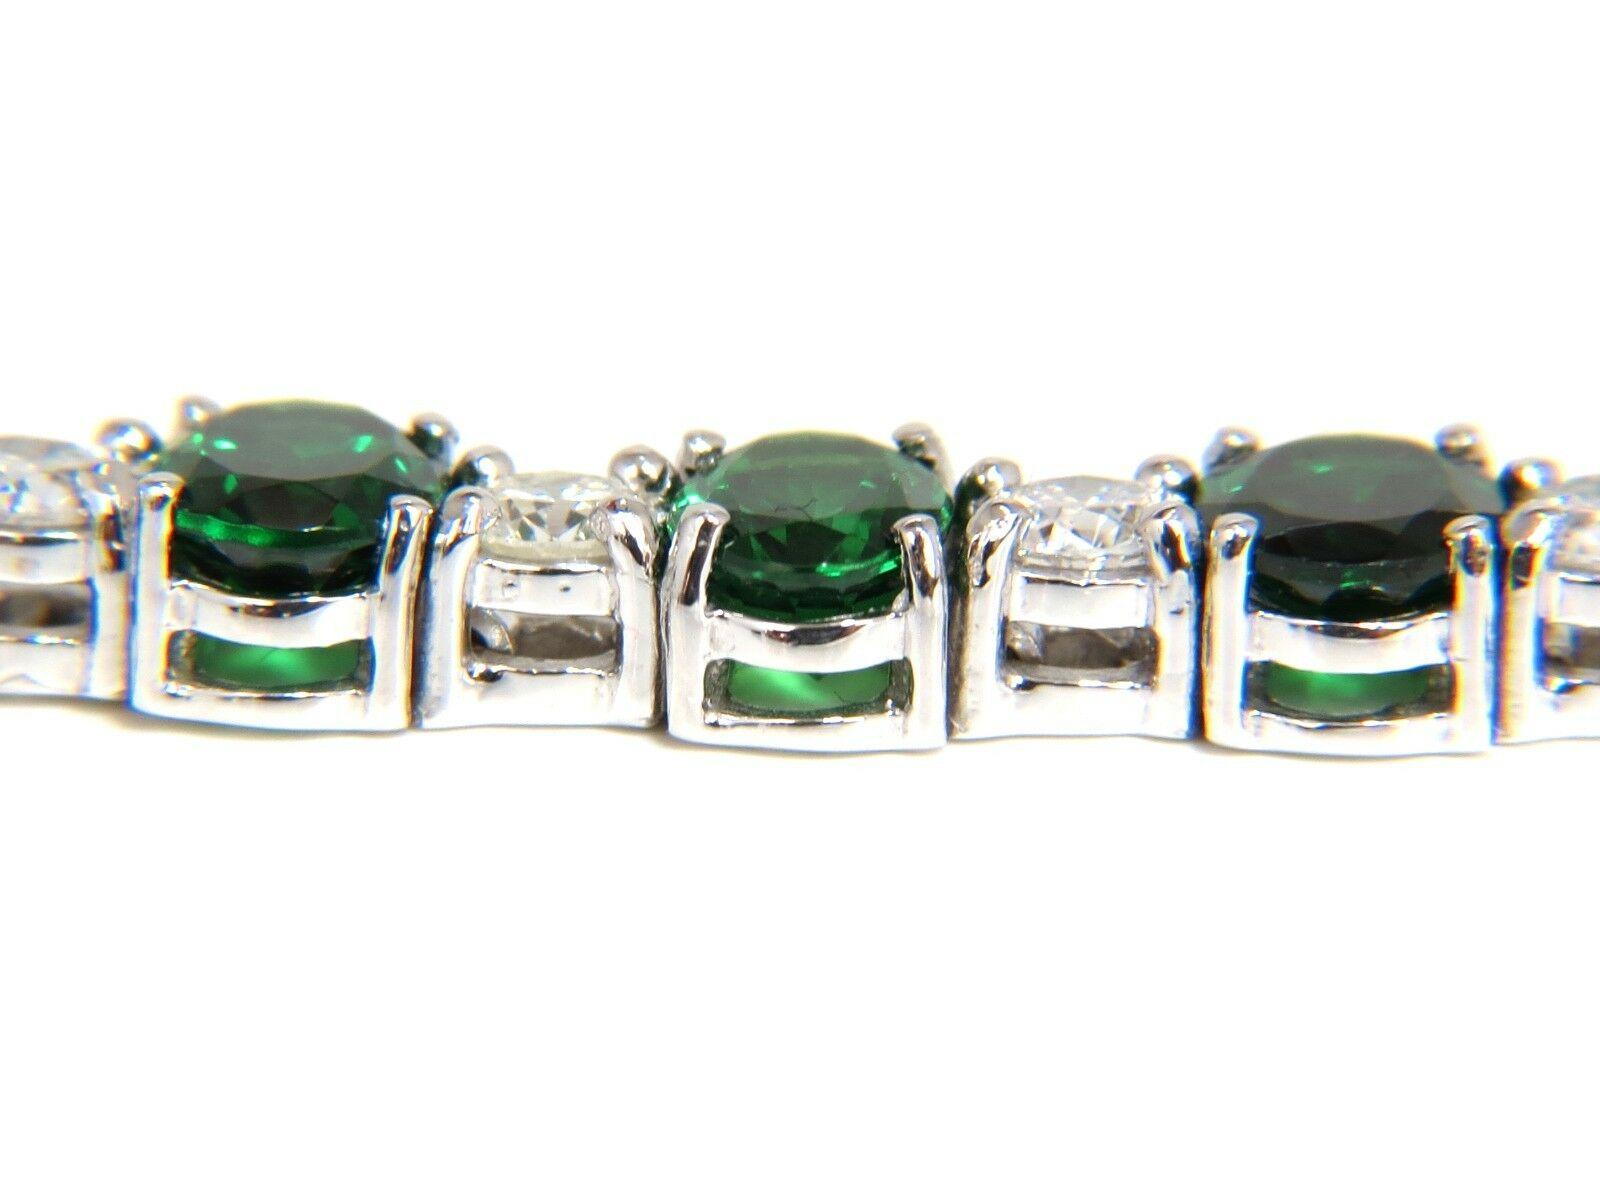 Natural Tanzanite Diamonds bracelet.

17.26ct. Natural Tzavorites 

Oval Brilliant cuts & full faceted.

Clean Clarity

Vivid Green Supreme Colors 

Excellent Transparency.

Average 5 X 7mm

20 Tsavorites


3.42ct. Diamonds

Rounds & Full